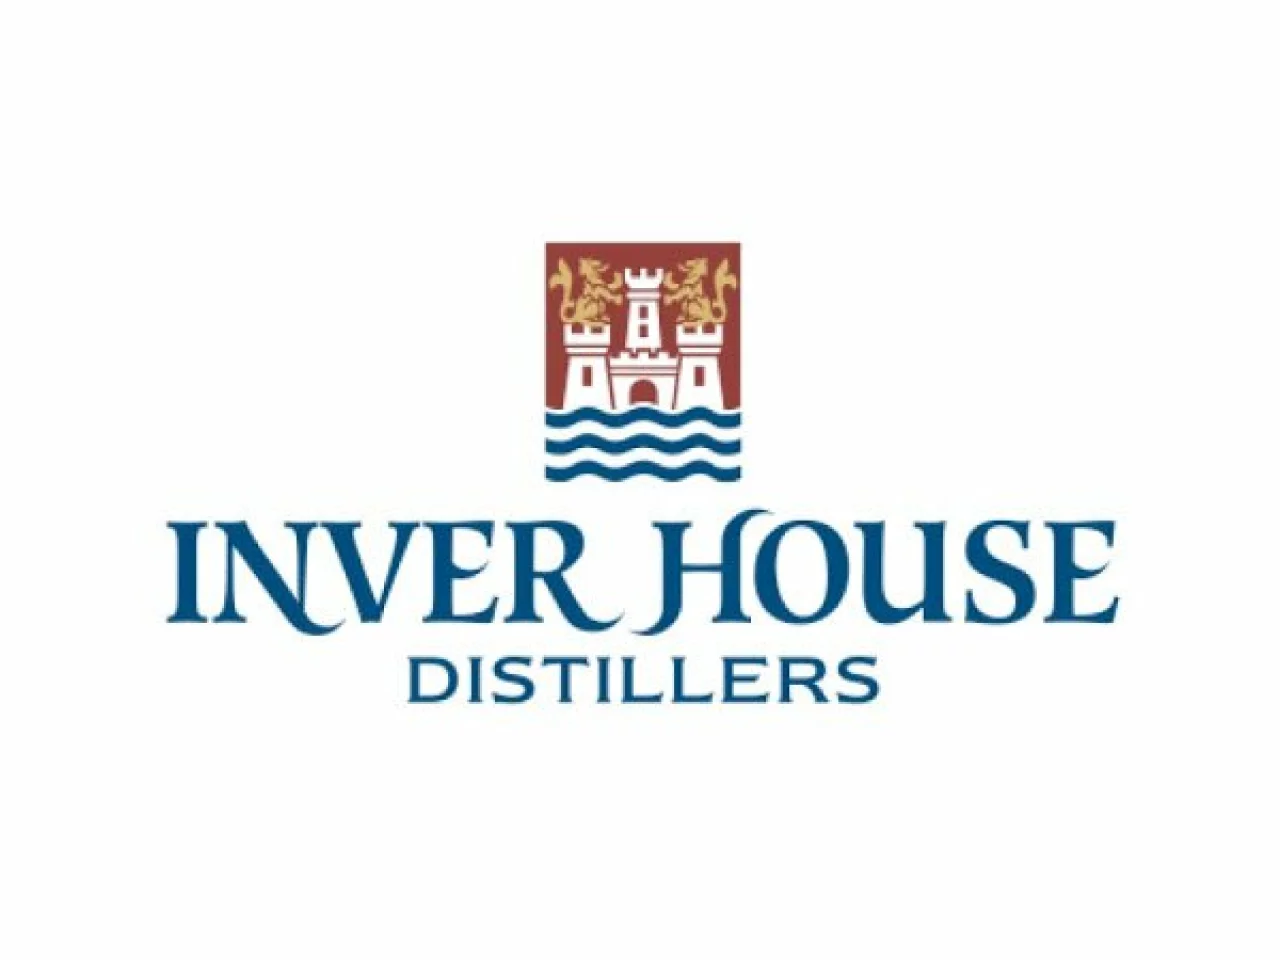 Inver house distillers logo